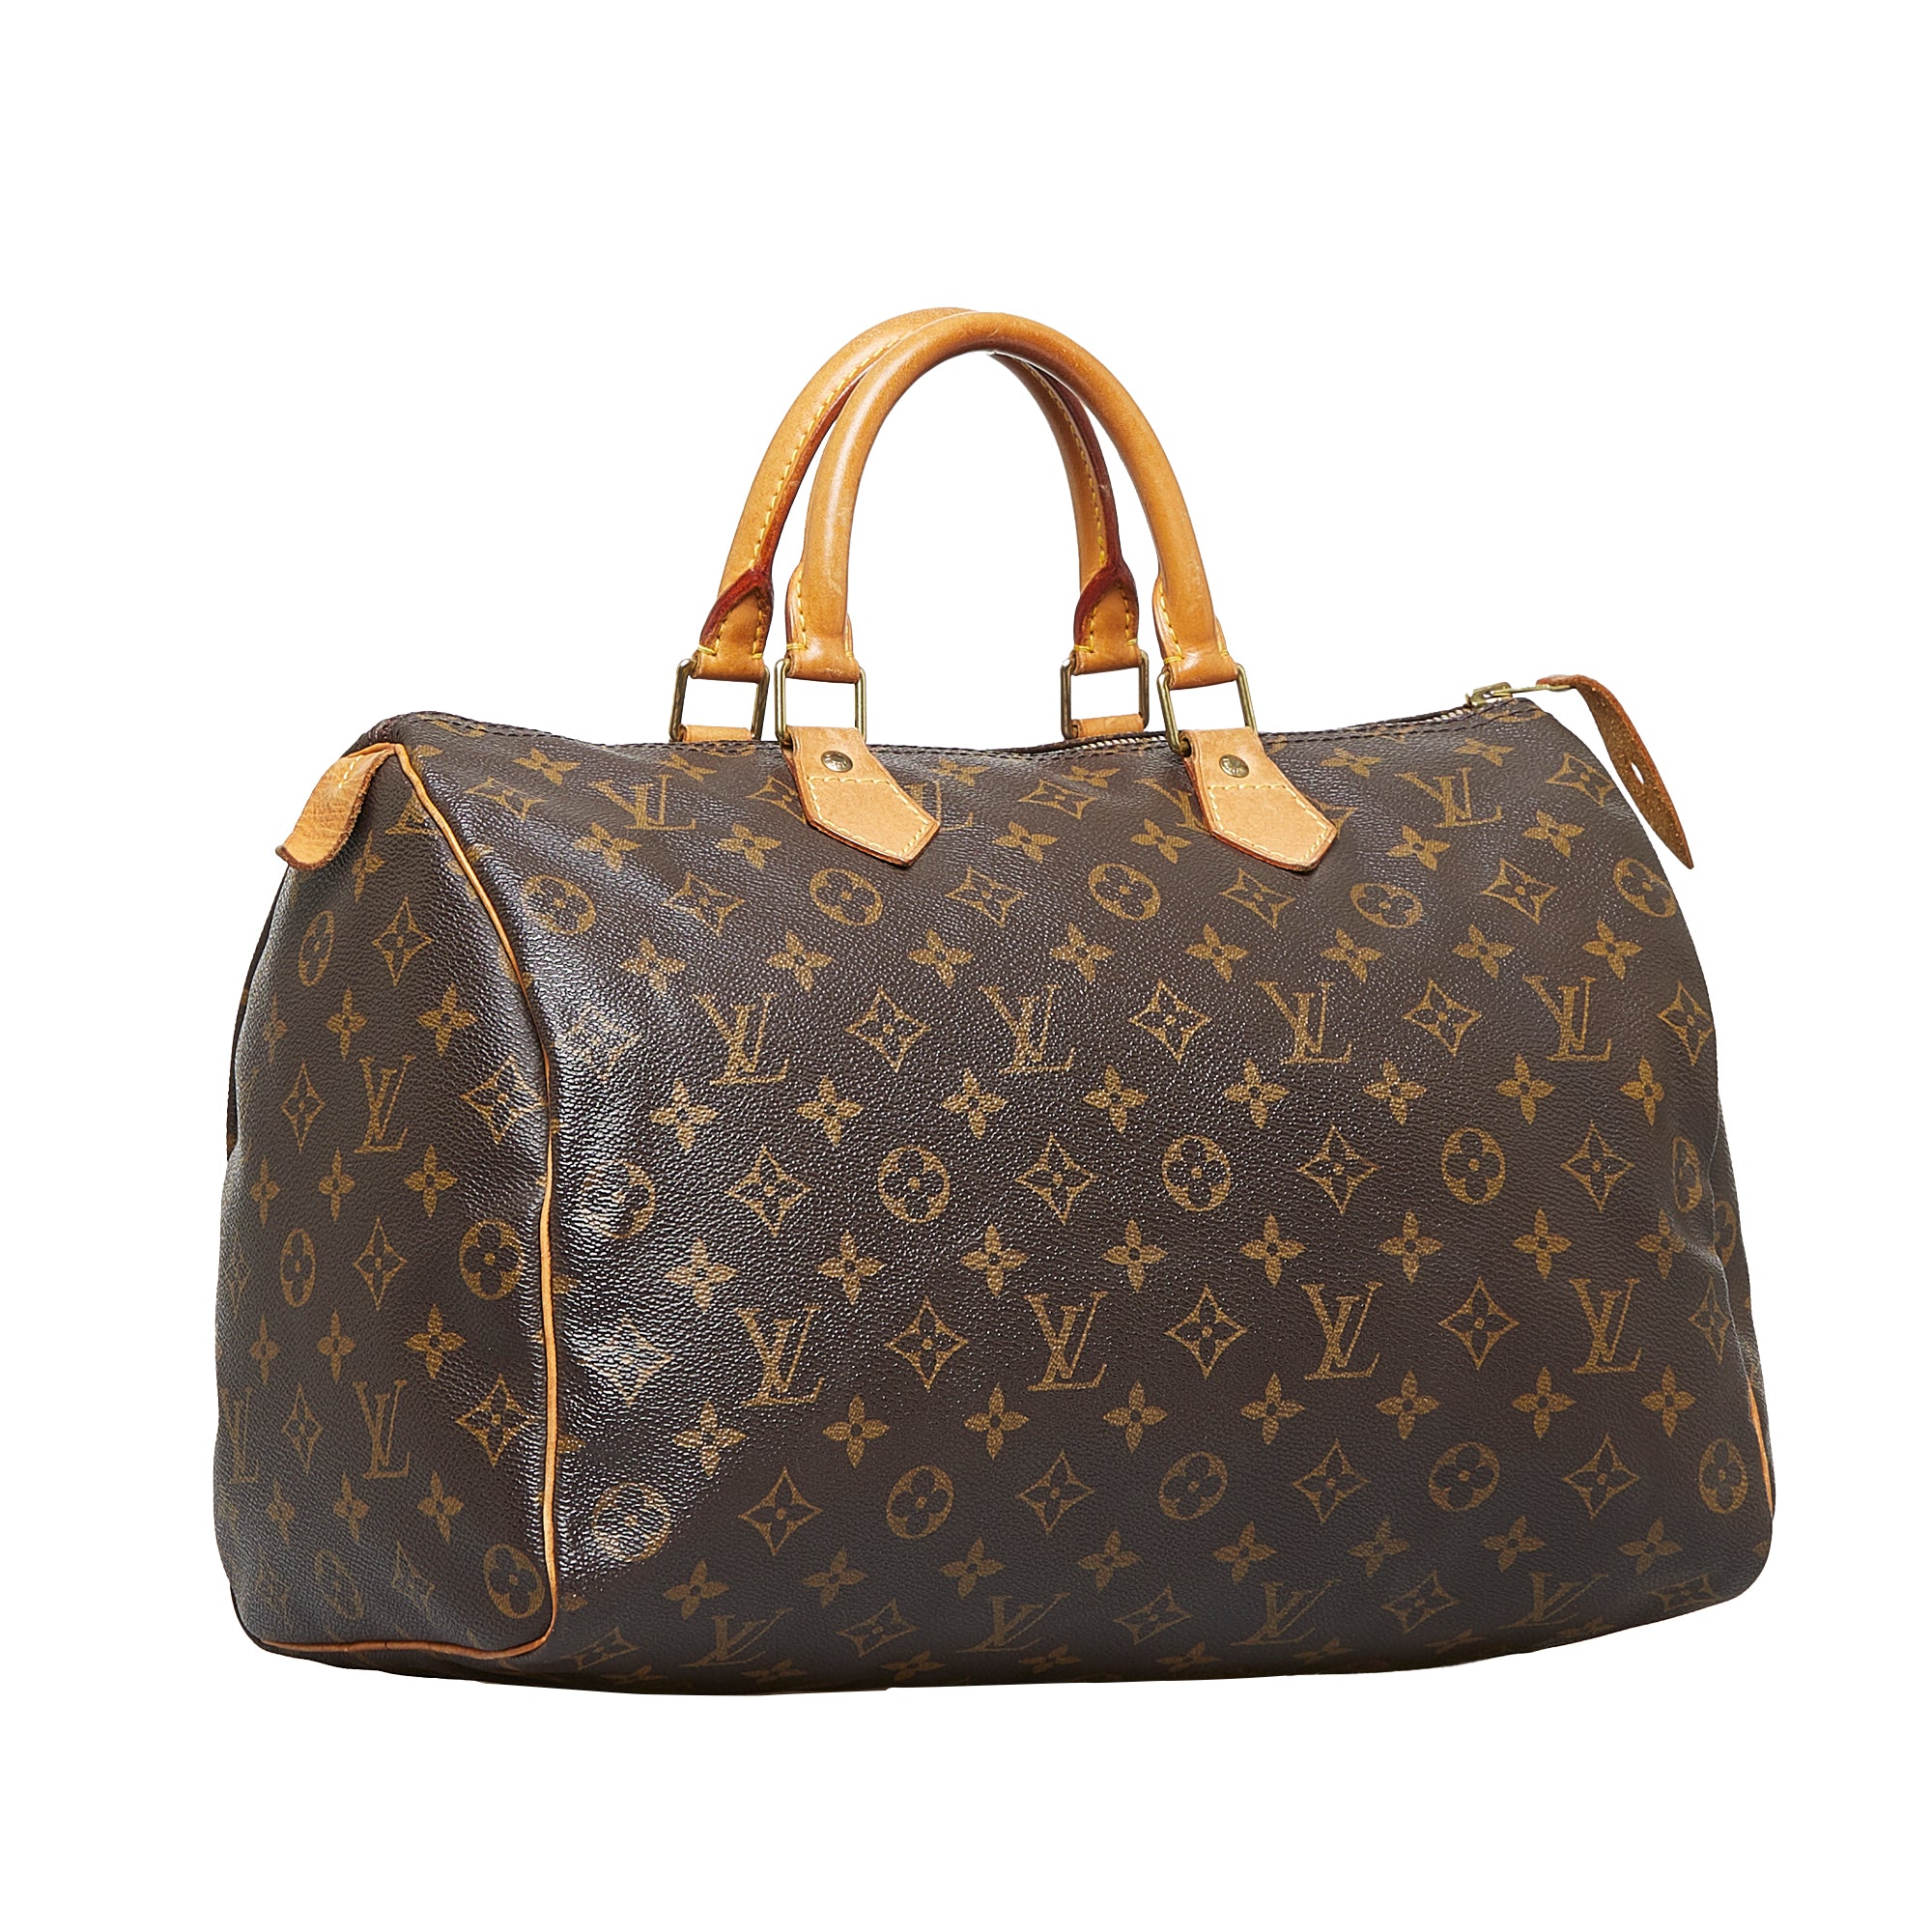 SALE)Louis Vuitton Speedy 35 Monogram Bag Brown